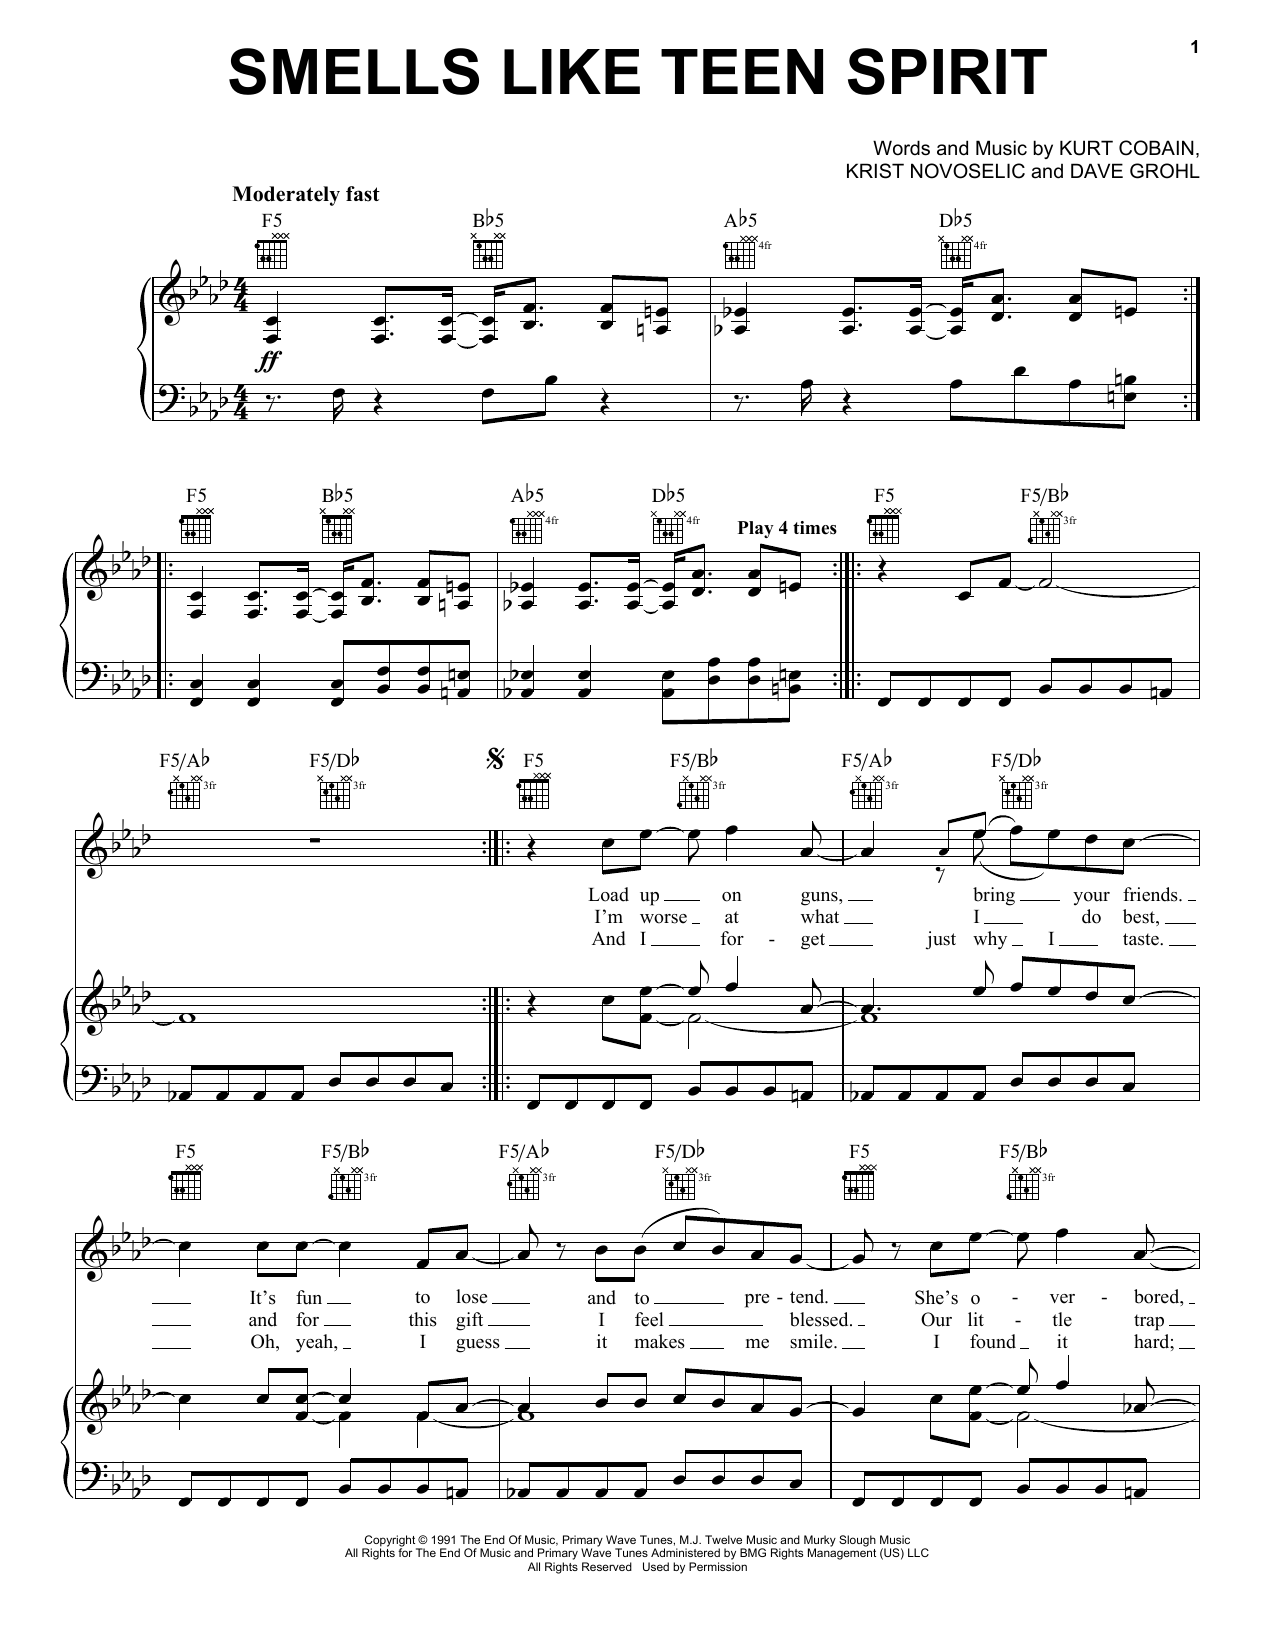 Nirvana Smells Like Teen Spirit Sheet Music Notes & Chords for Alto Saxophone - Download or Print PDF